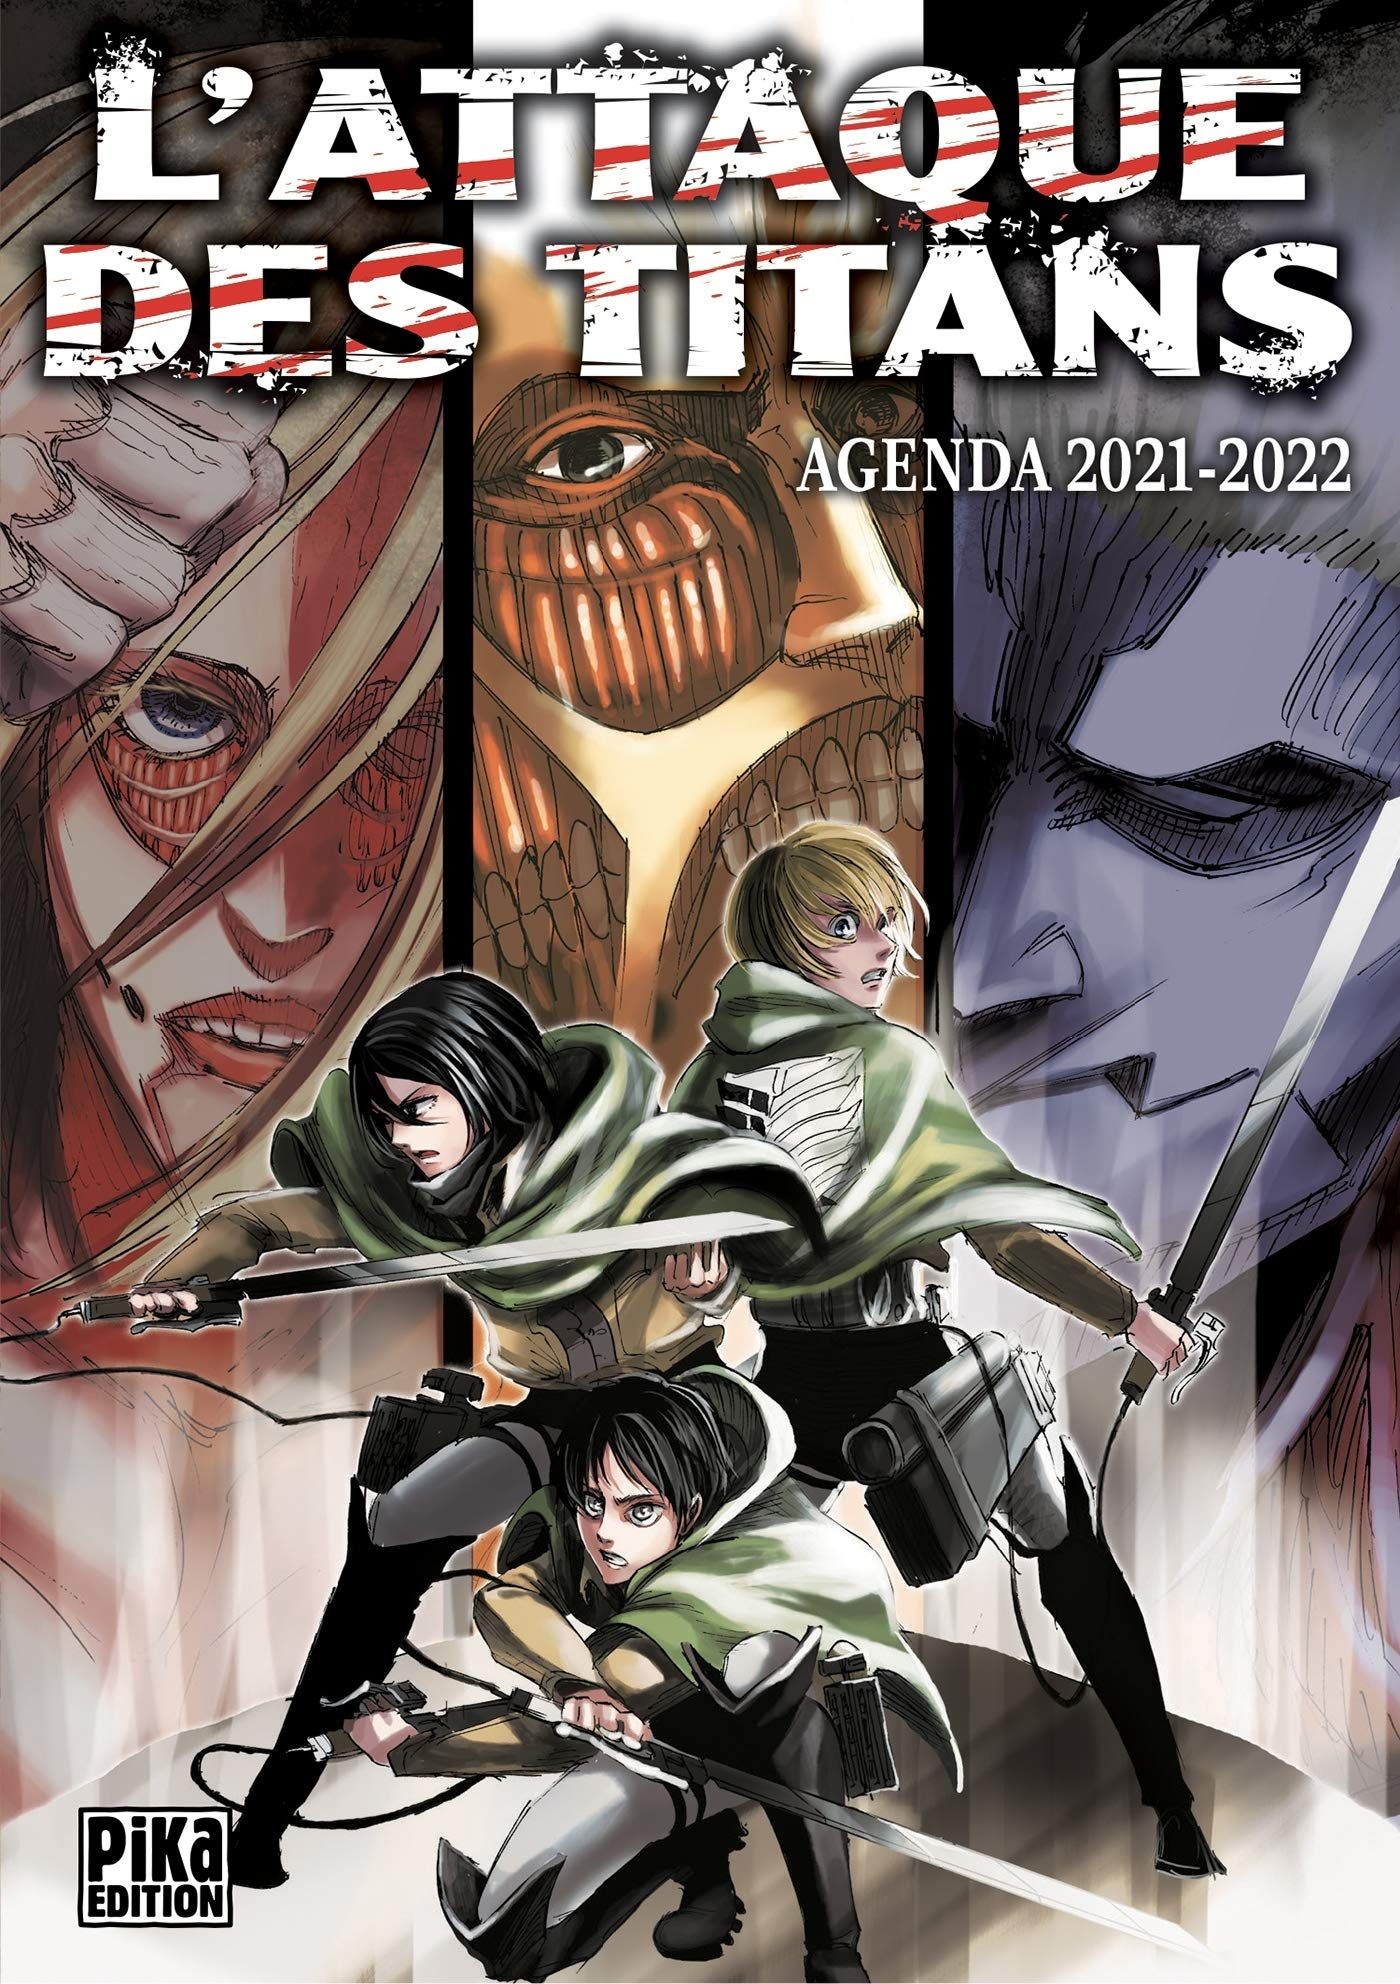 La suite de L'Attaque des Titans arrive en coffrets chez Pika, 29 Août 2022  - Manga news